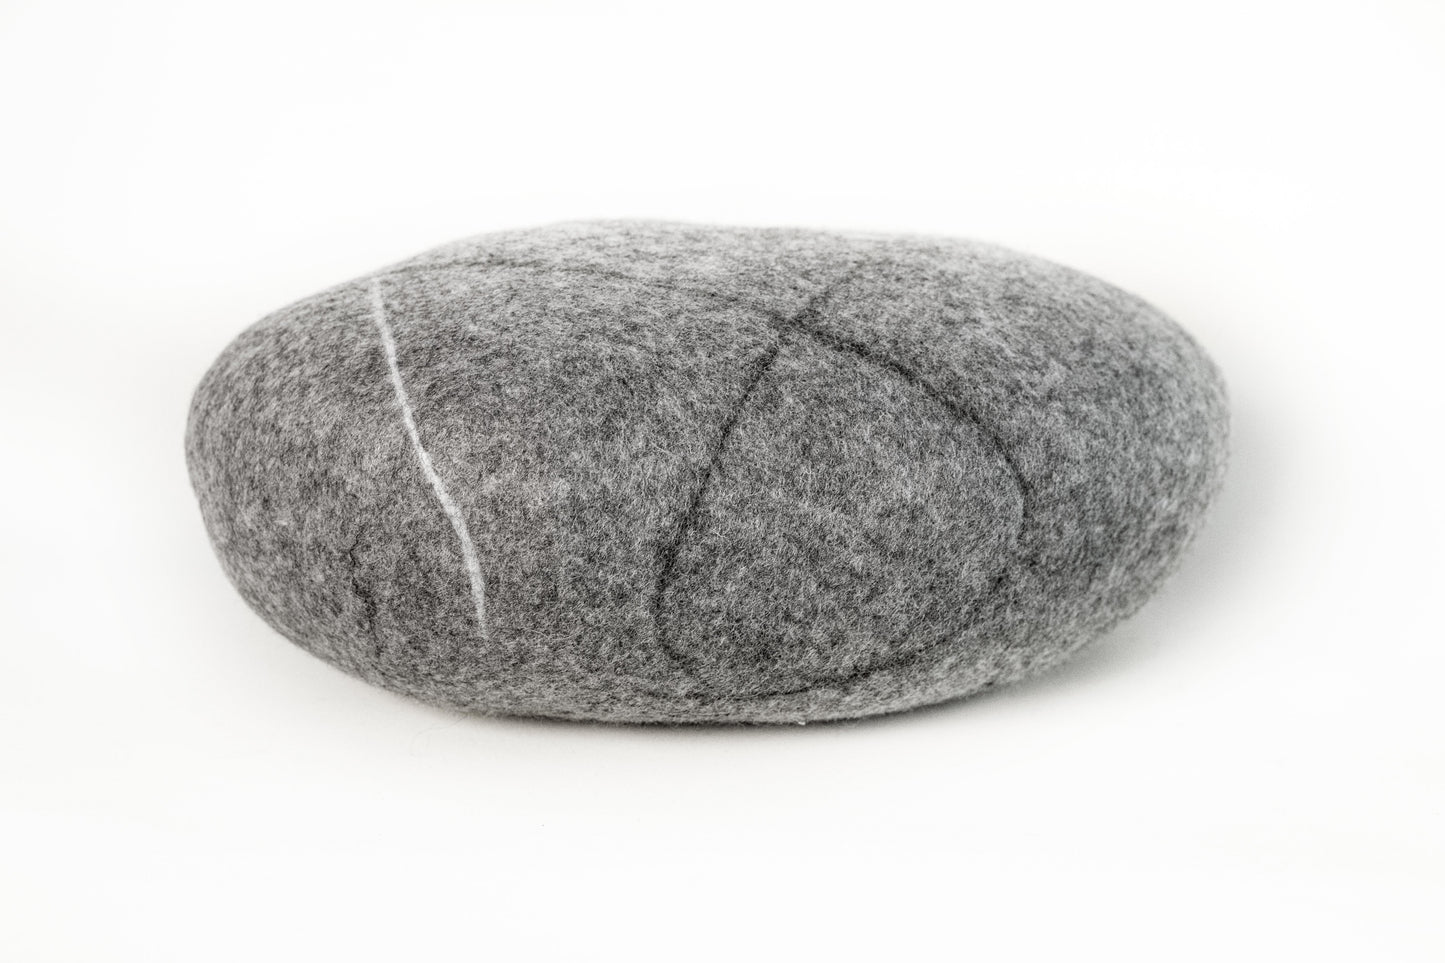 Felted stone